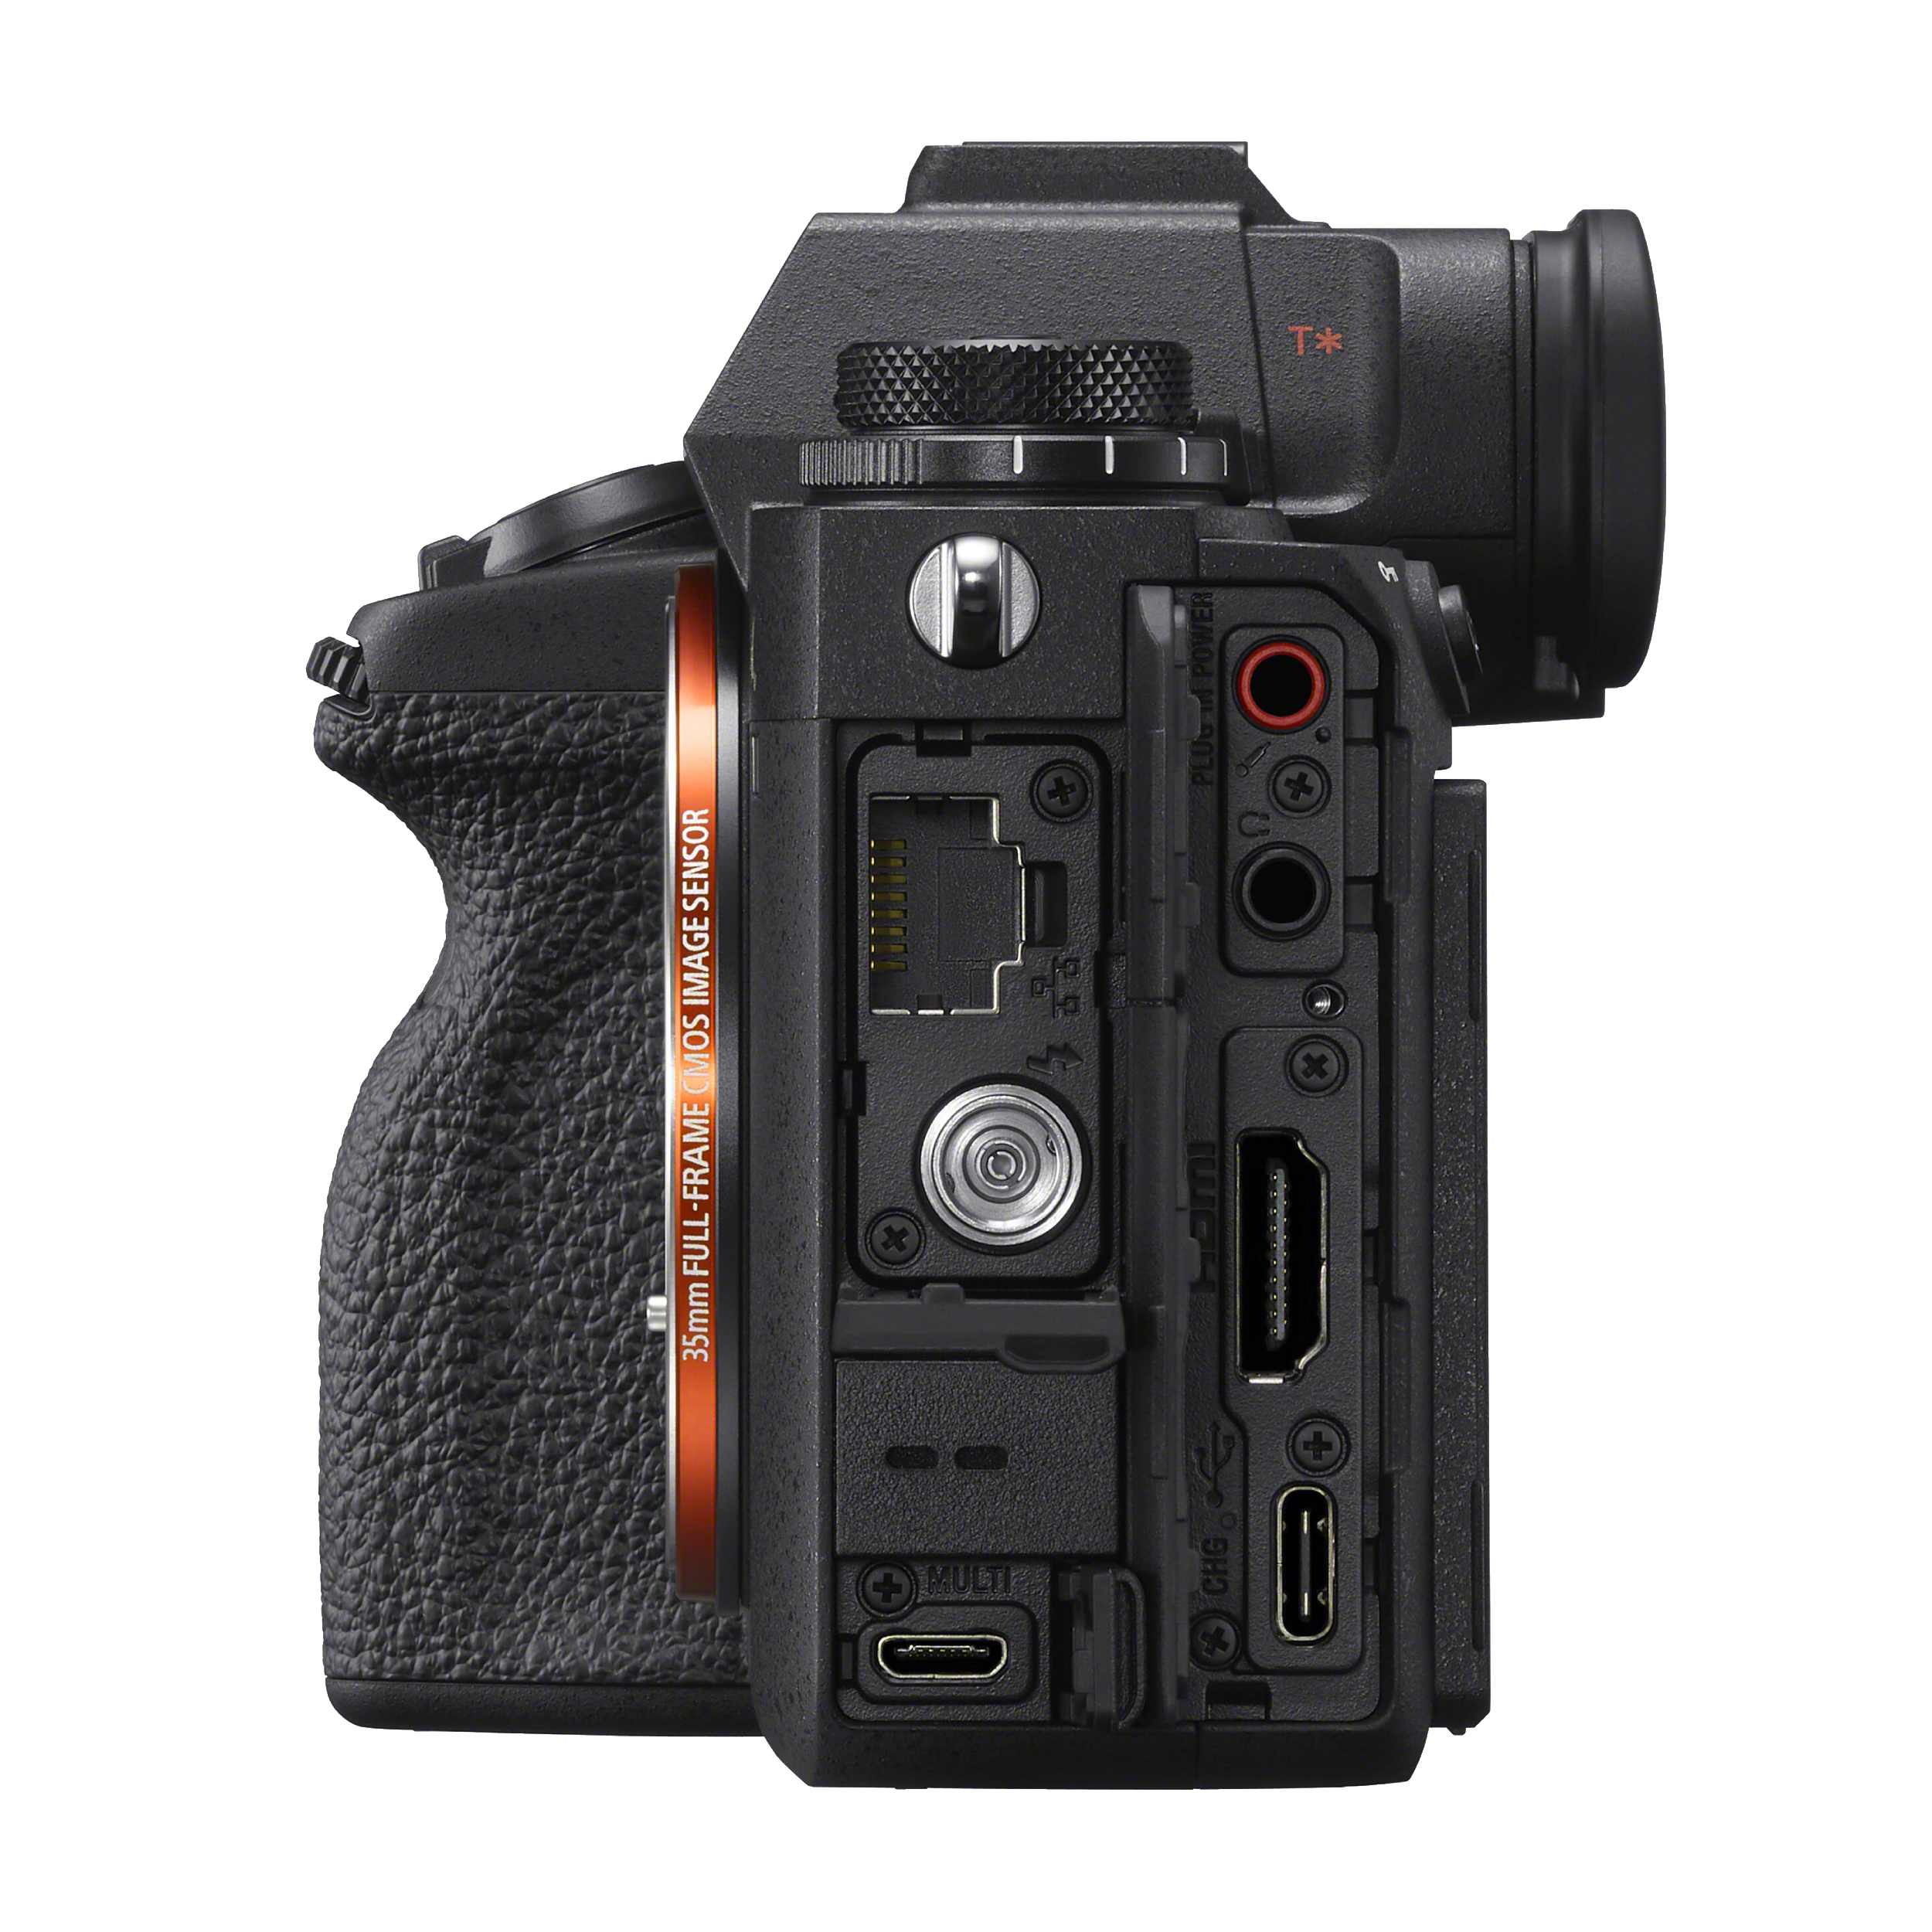 Sony ILCE1/B Alpha a1 Full-frame Interchangeable Lens Mirrorless Camera